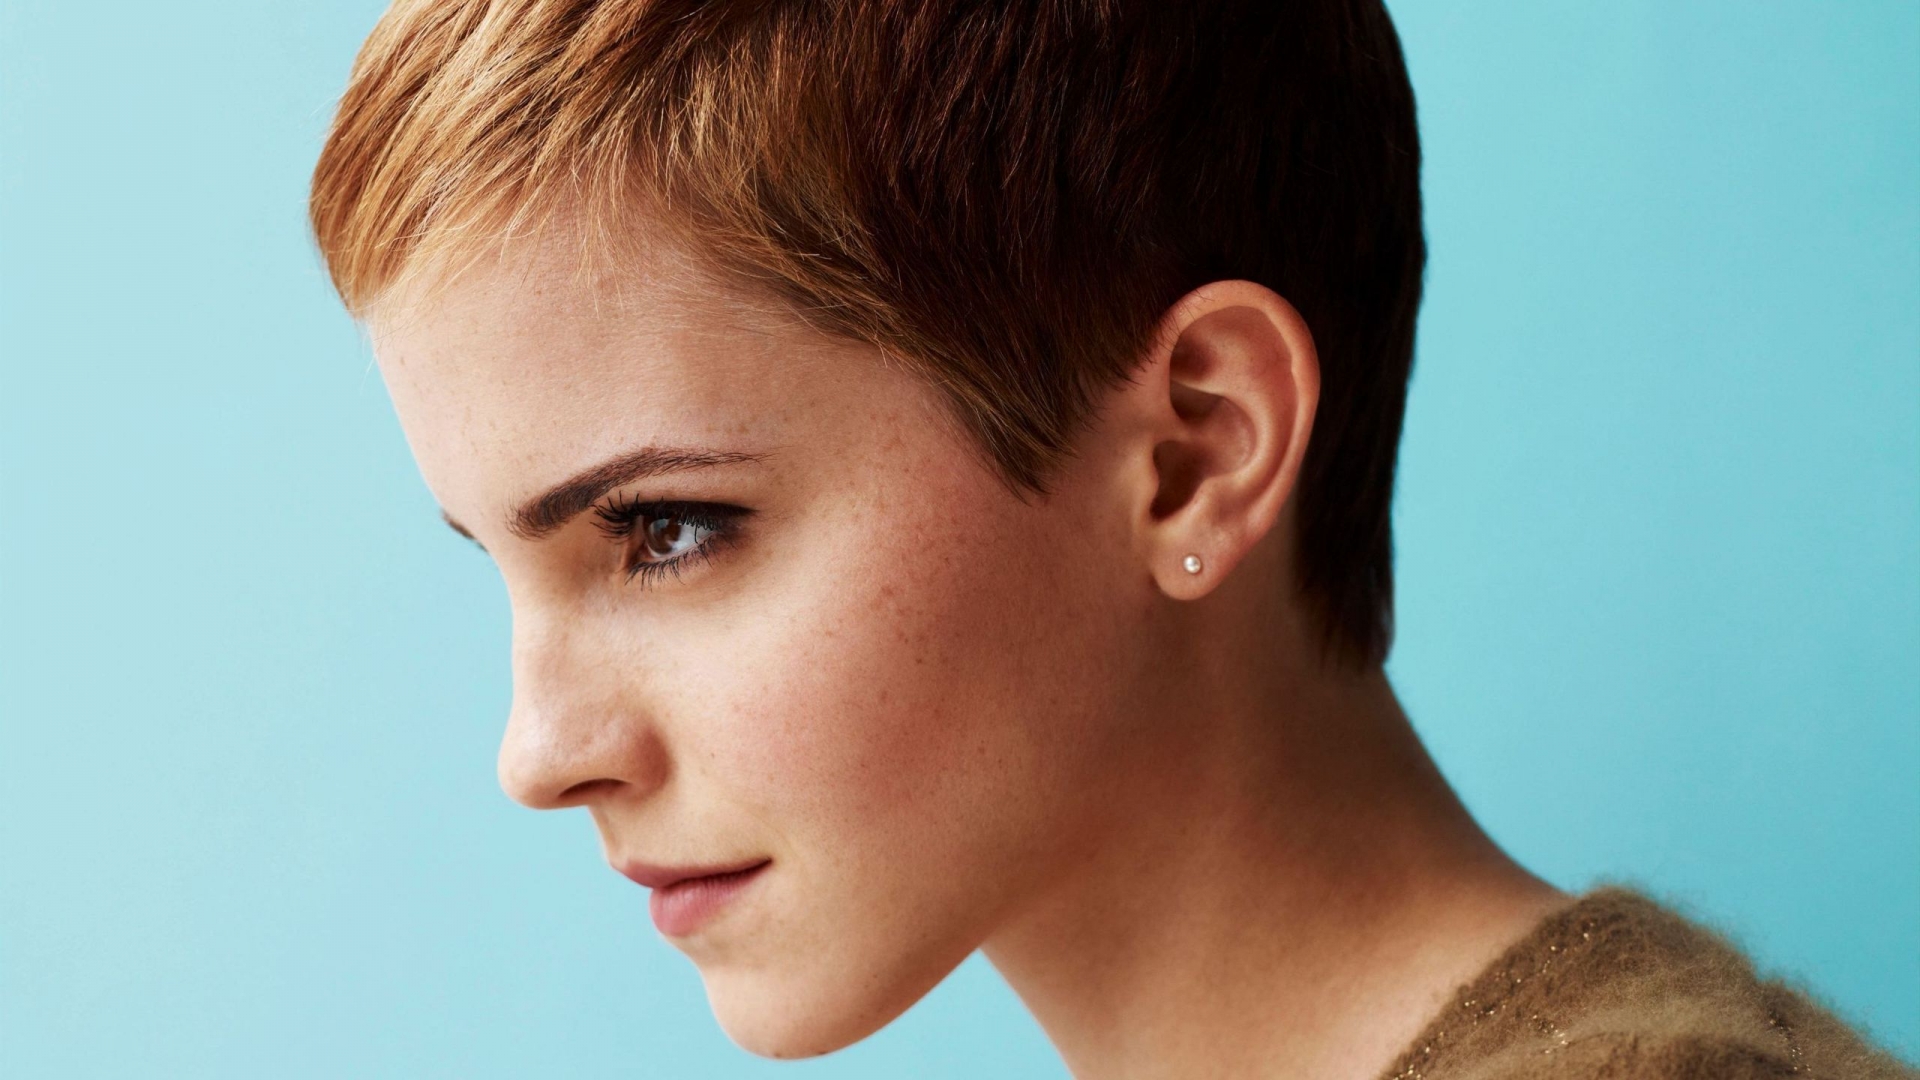 Emma Watson Short Hair for 1920 x 1080 HDTV 1080p resolution